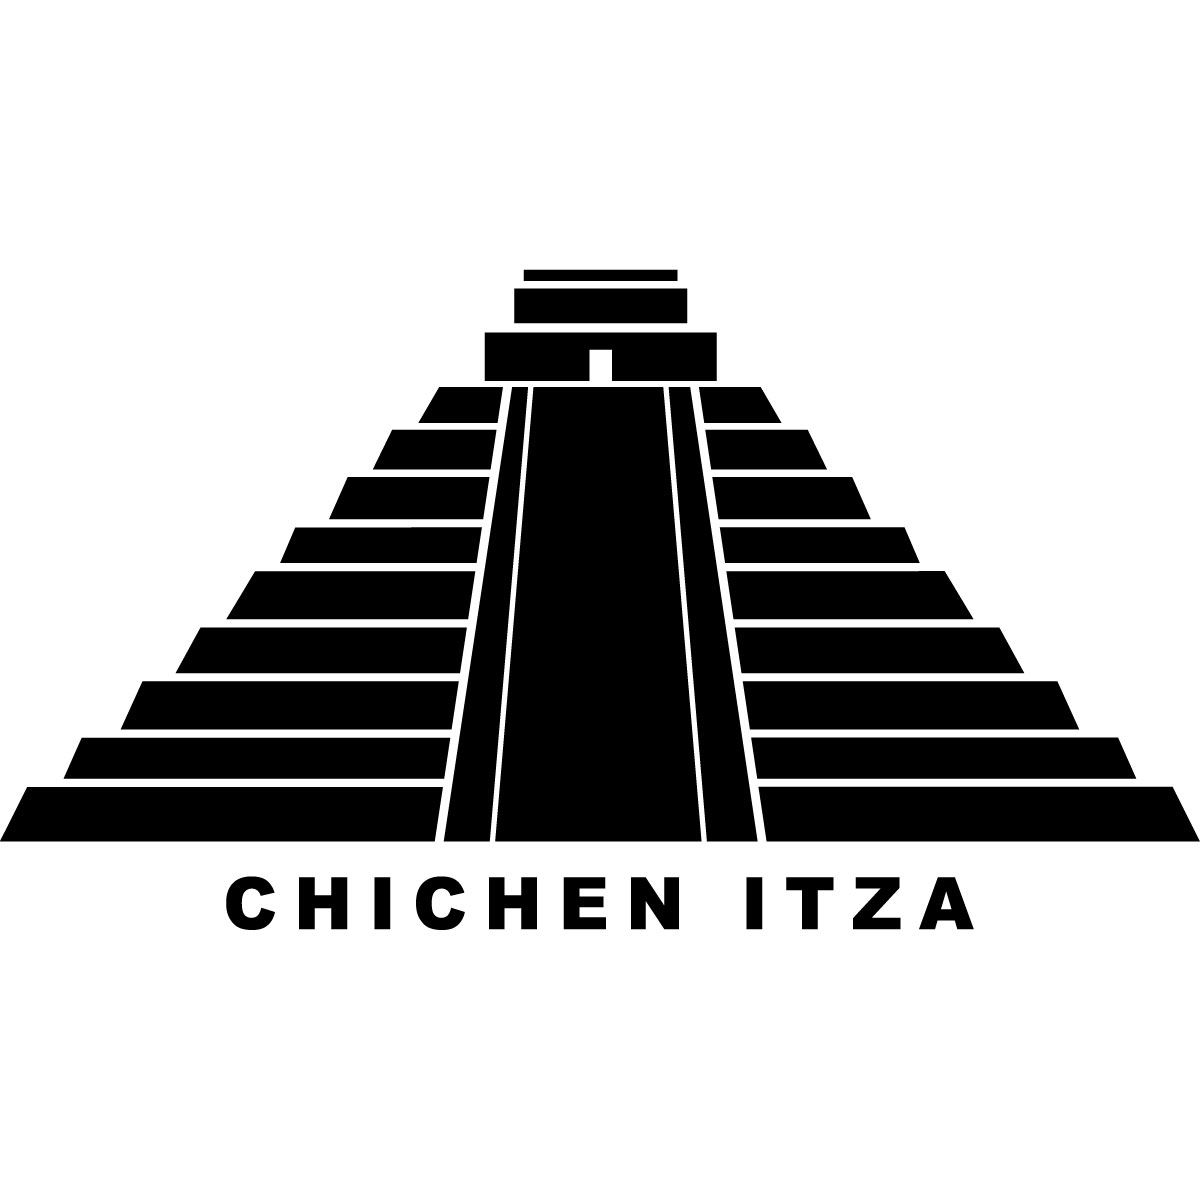 Vinilo Chichén Itzá